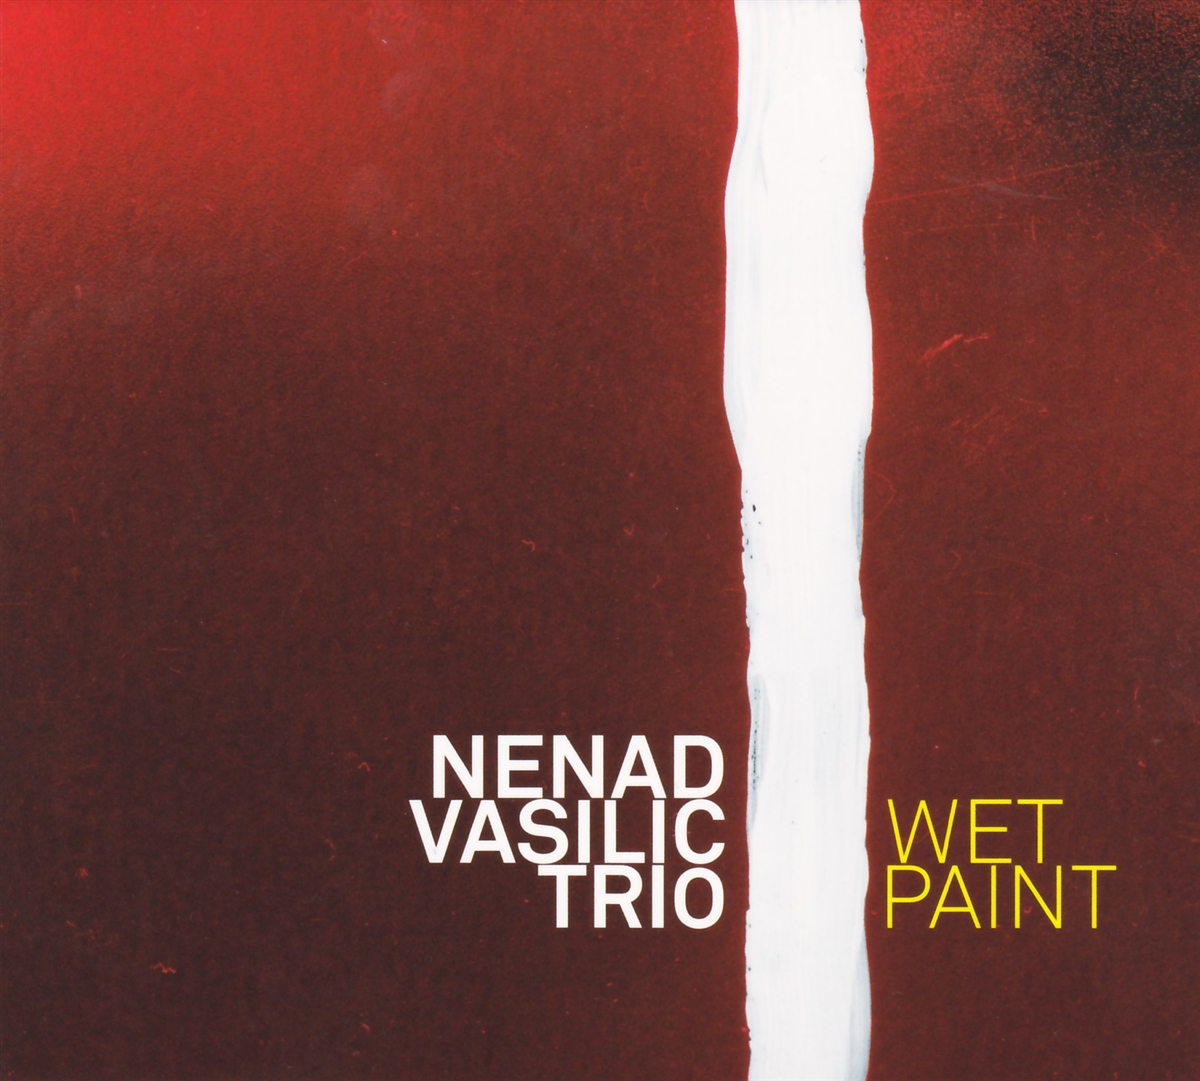 Nenad Vasilić Trio - Wet Paint